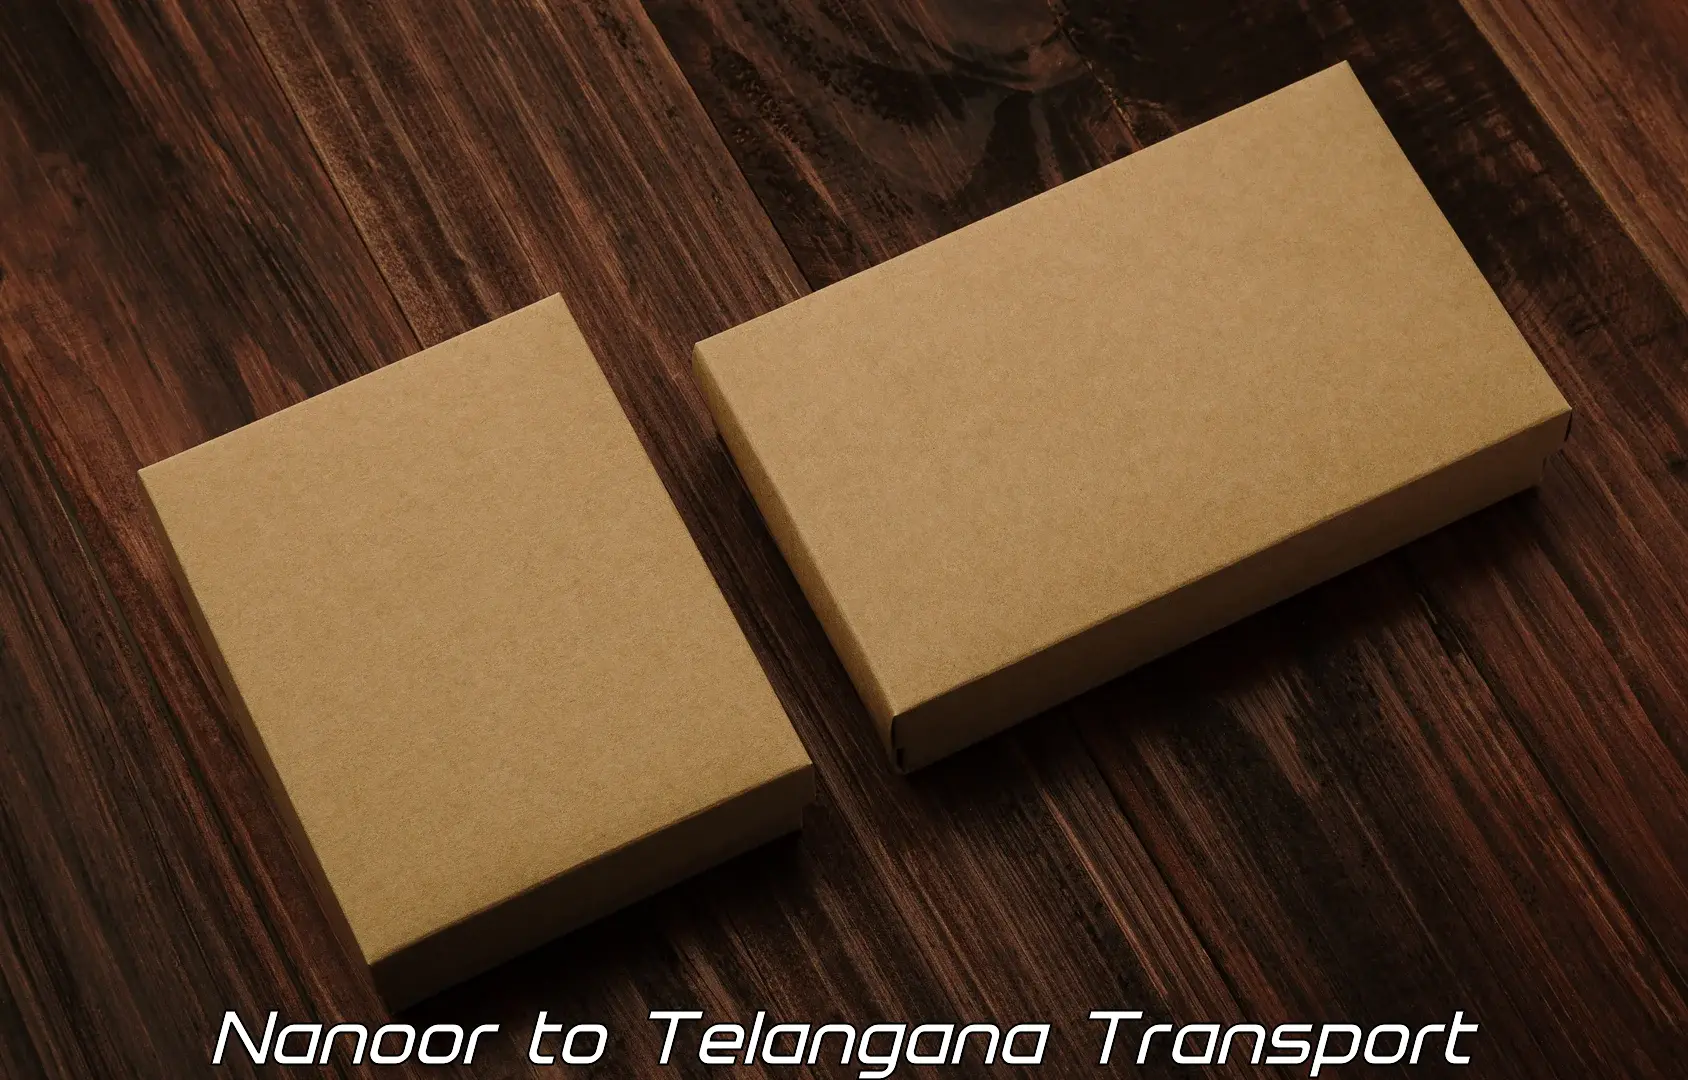 Bike transport service in Nanoor to Telangana